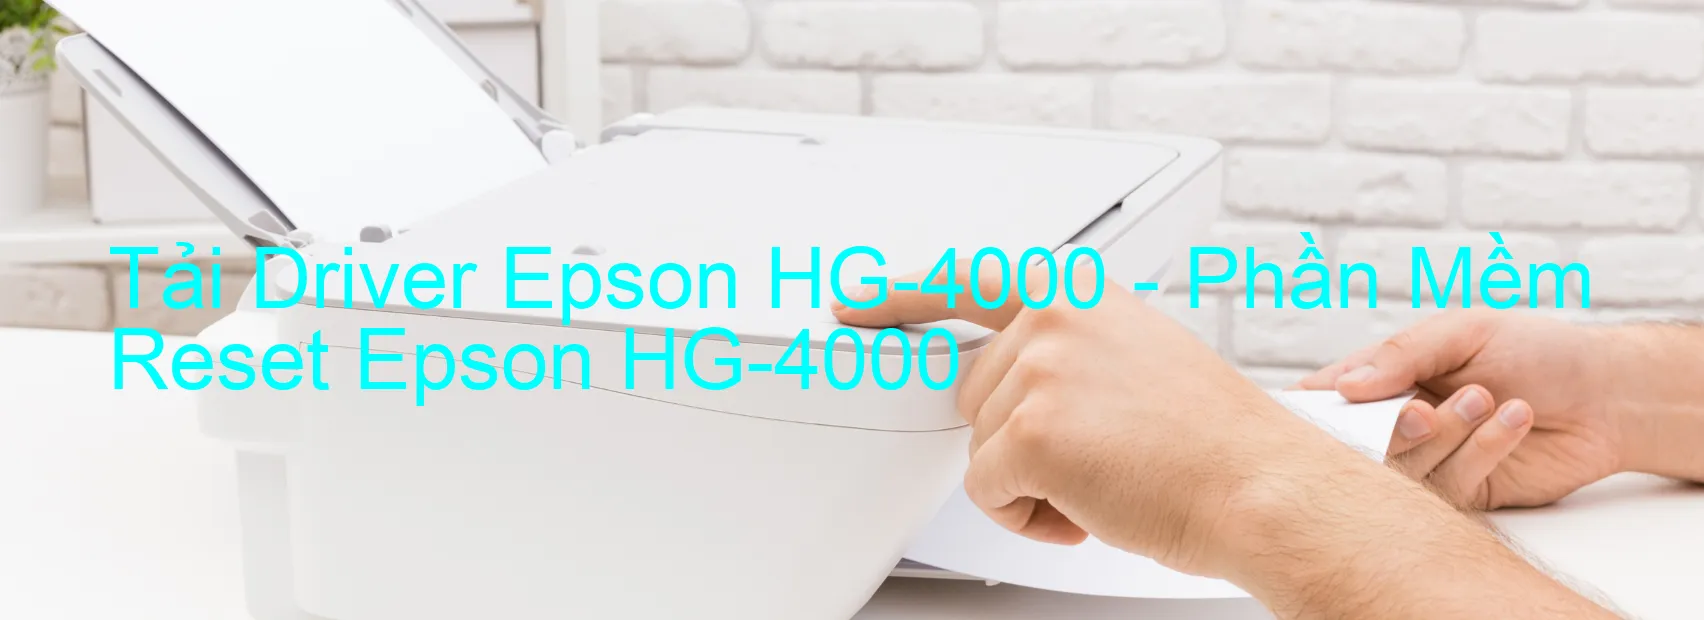 Driver Epson HG-4000, Phần Mềm Reset Epson HG-4000